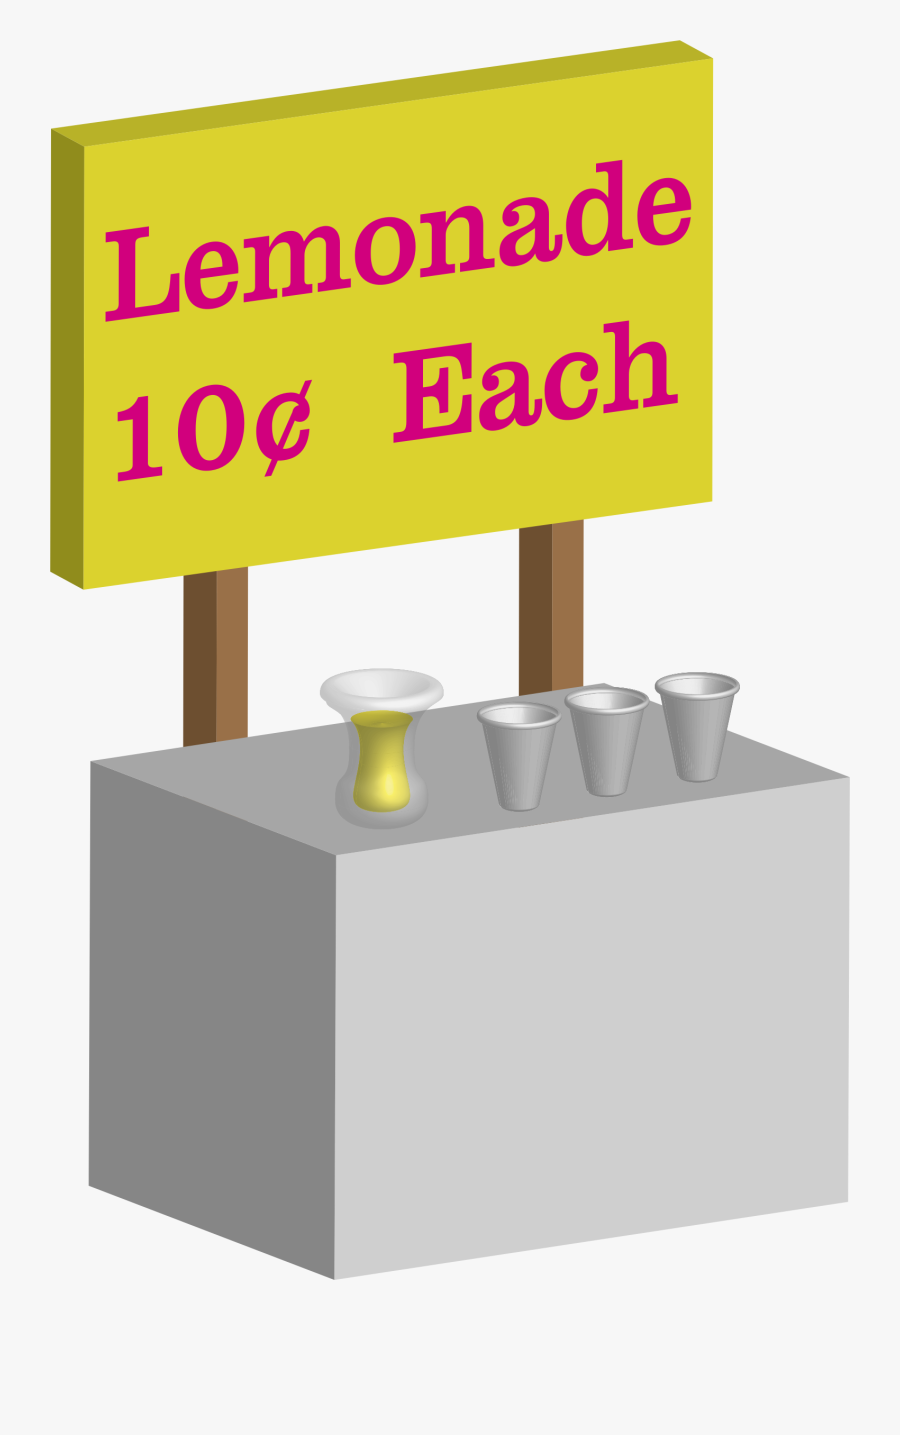 Lemonade Stand - Lemonade Stand Clipart 10, Transparent Clipart